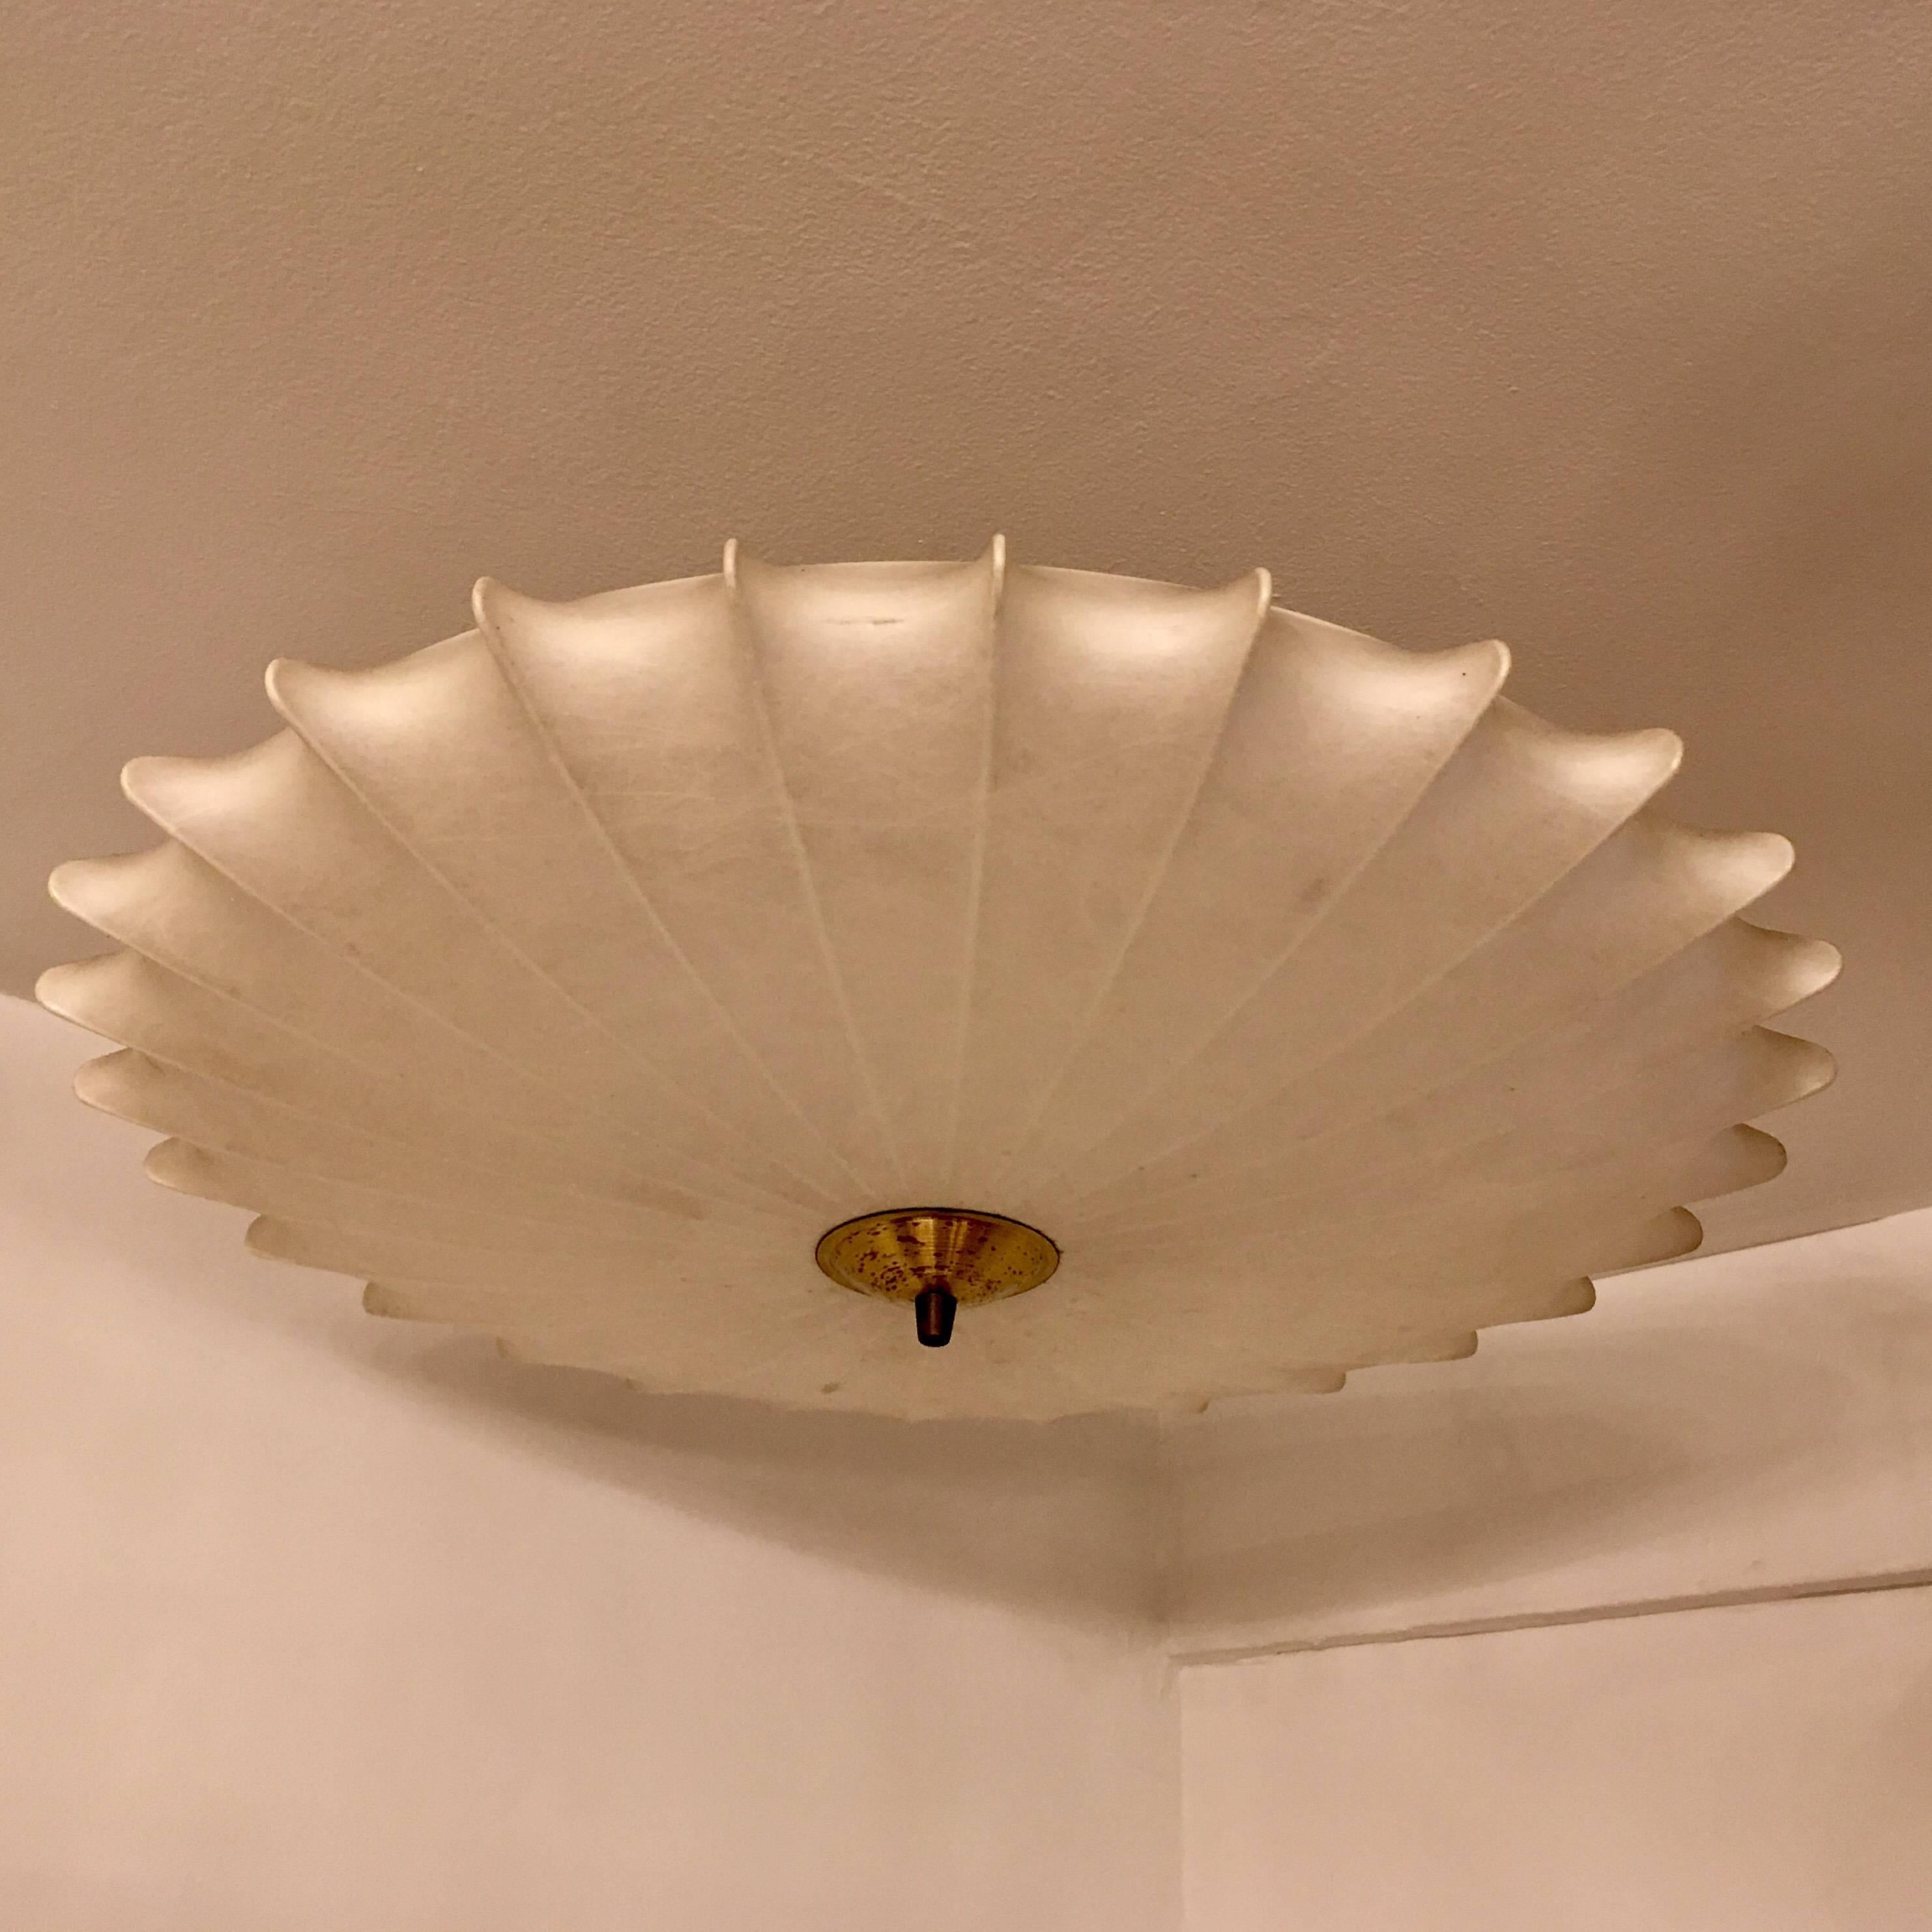 A wonderful spun resin 1960s Italian sculptural flush ceiling light with an aged brass finial. Newly rewired.